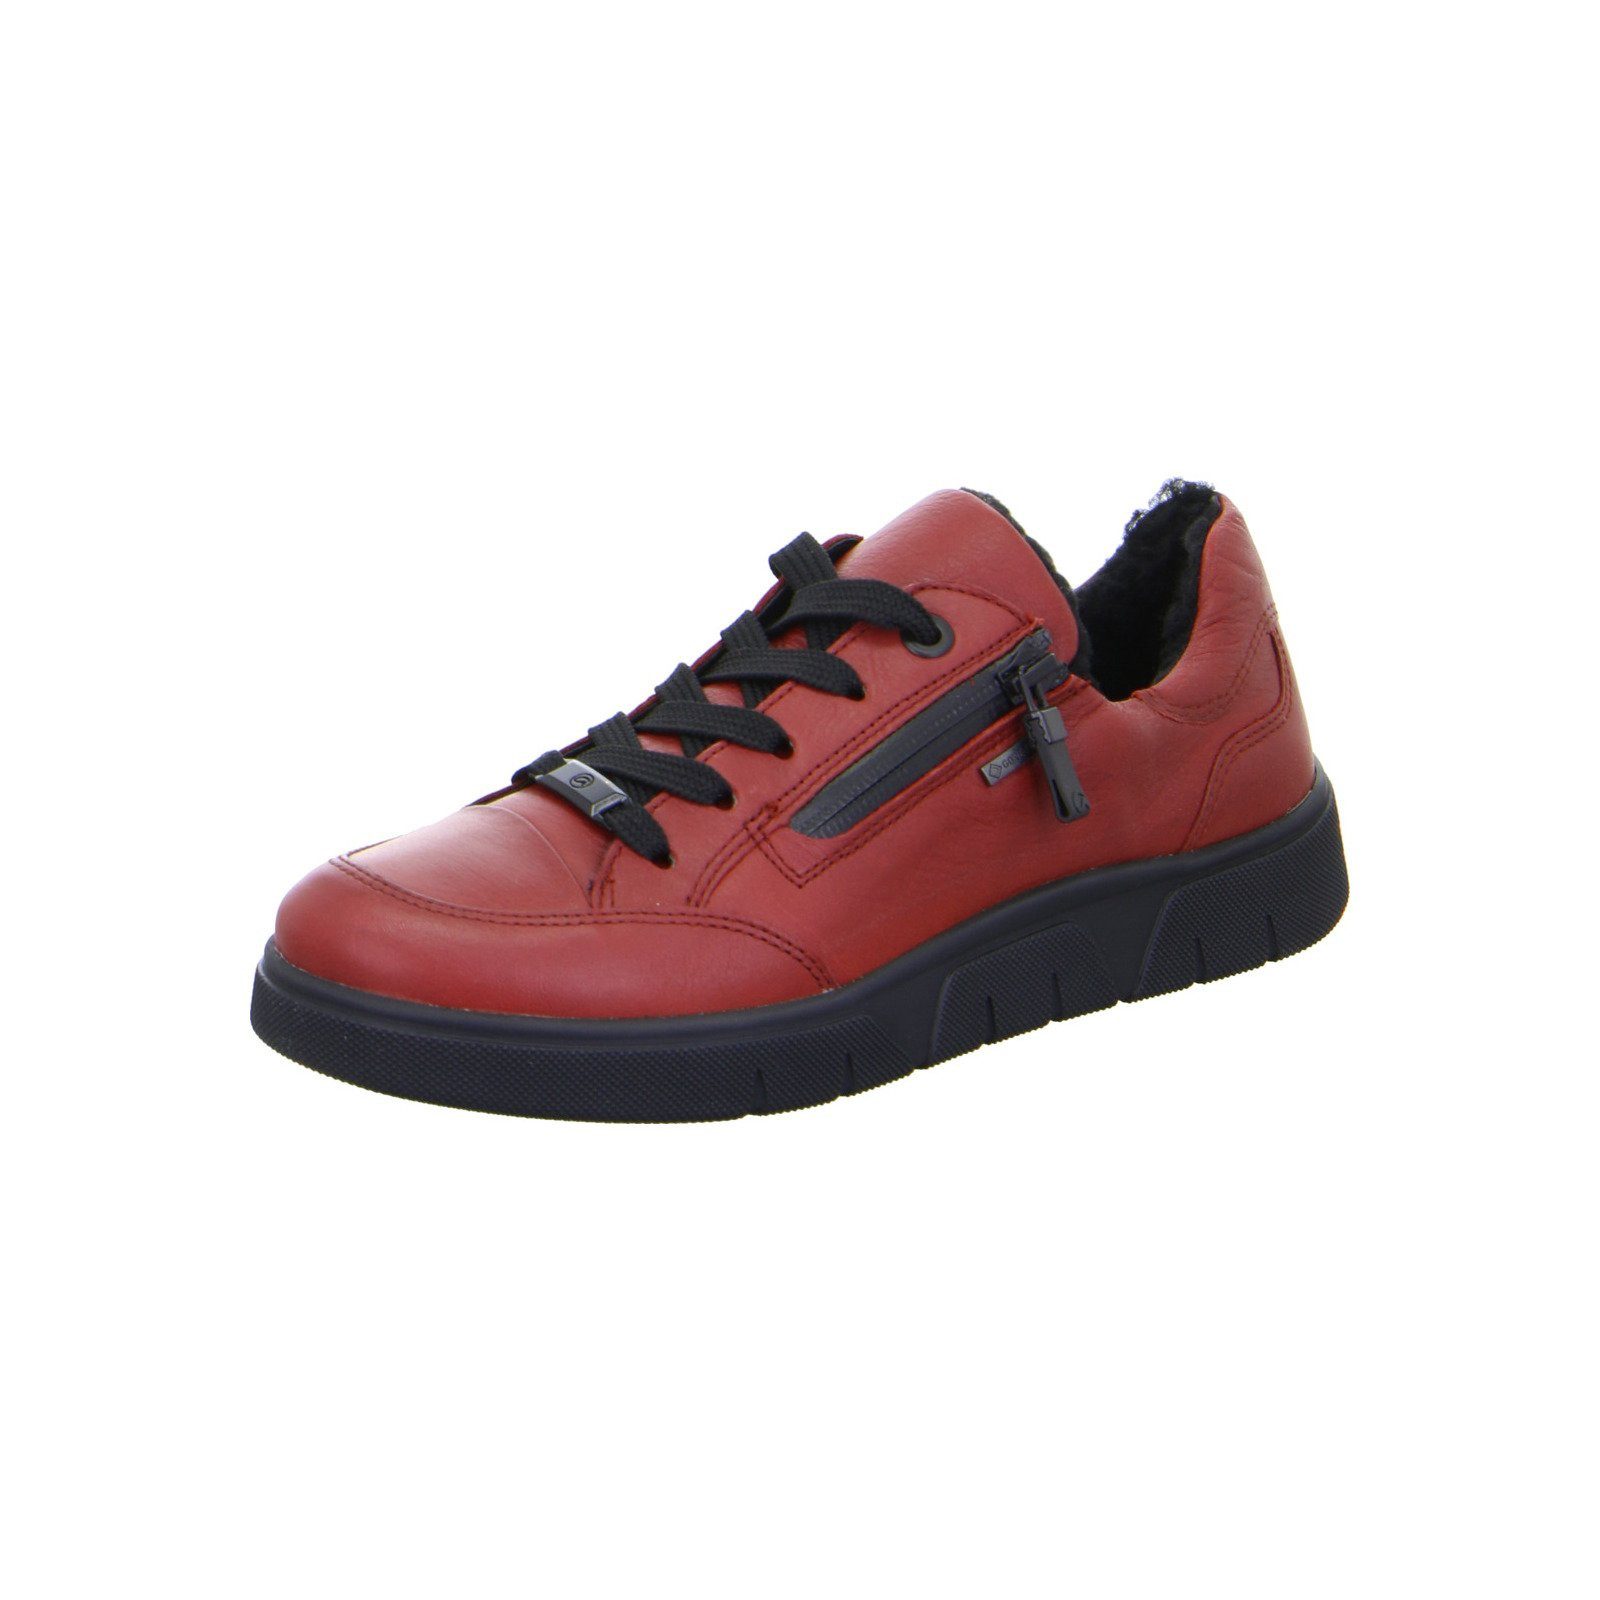 Ara Rom-Sport - Damen Schuhe Schnürschuh rot